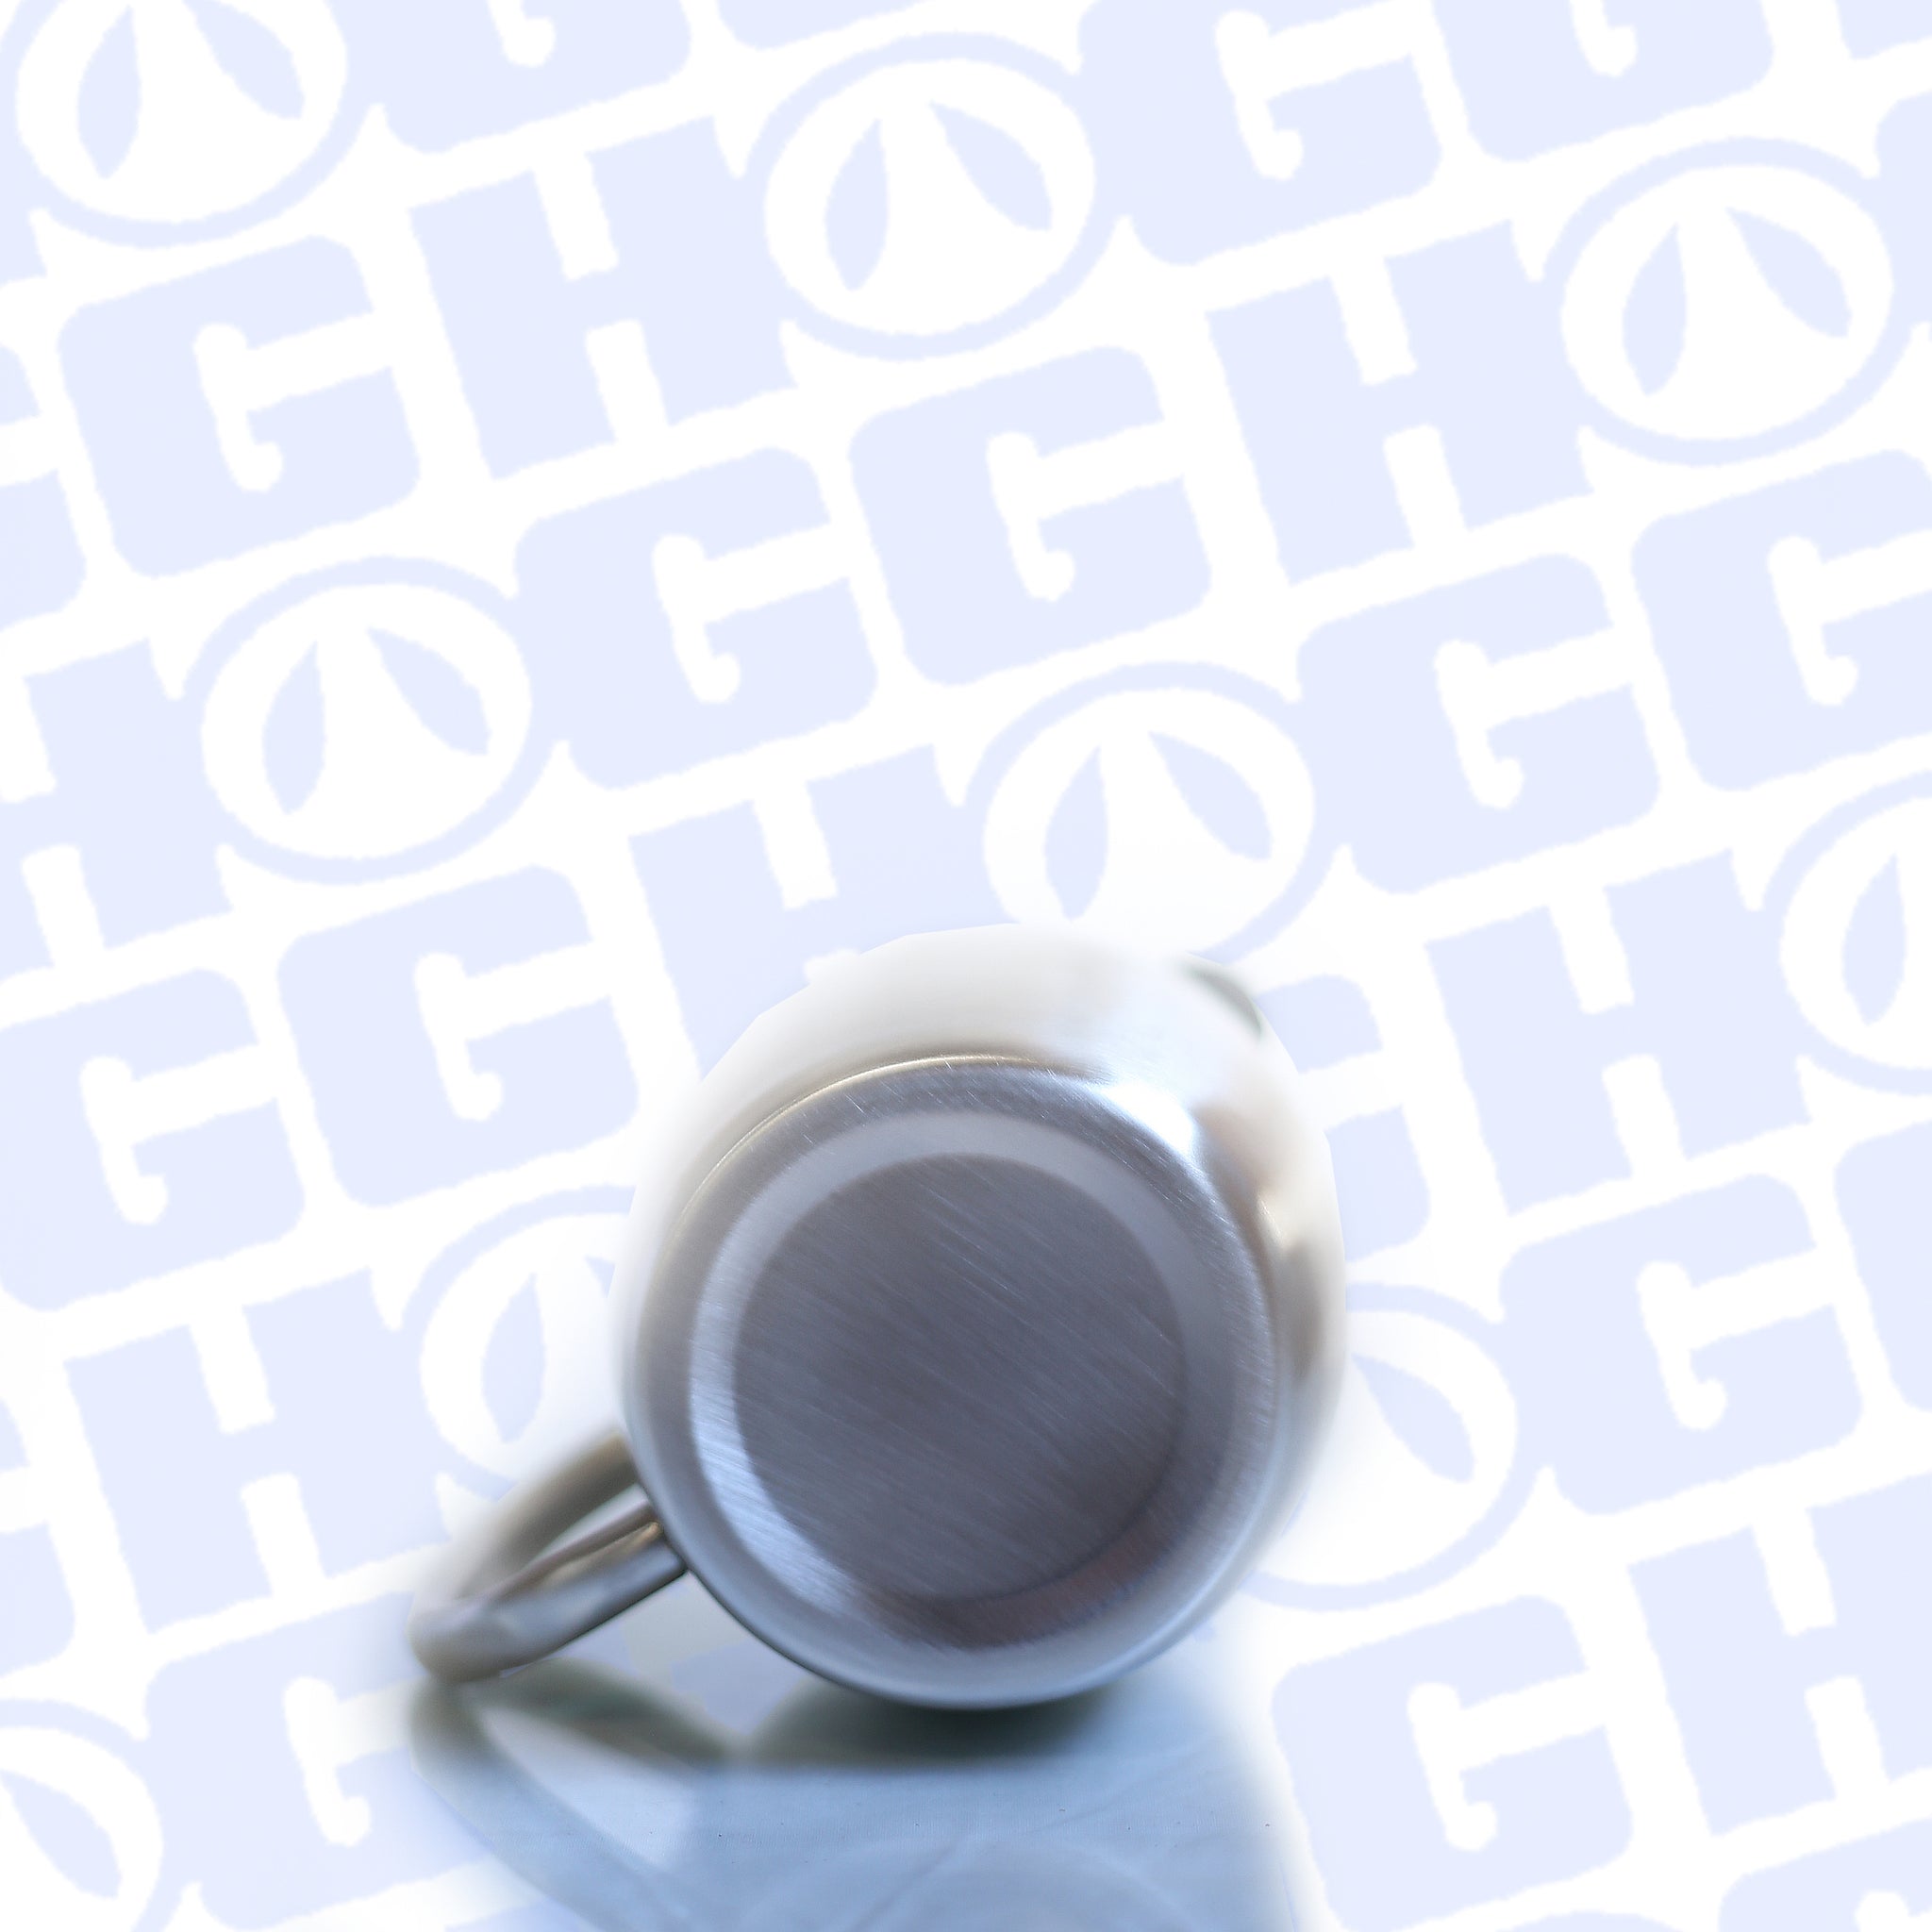 Glass Logo Mug — Big Shoulders Coffee